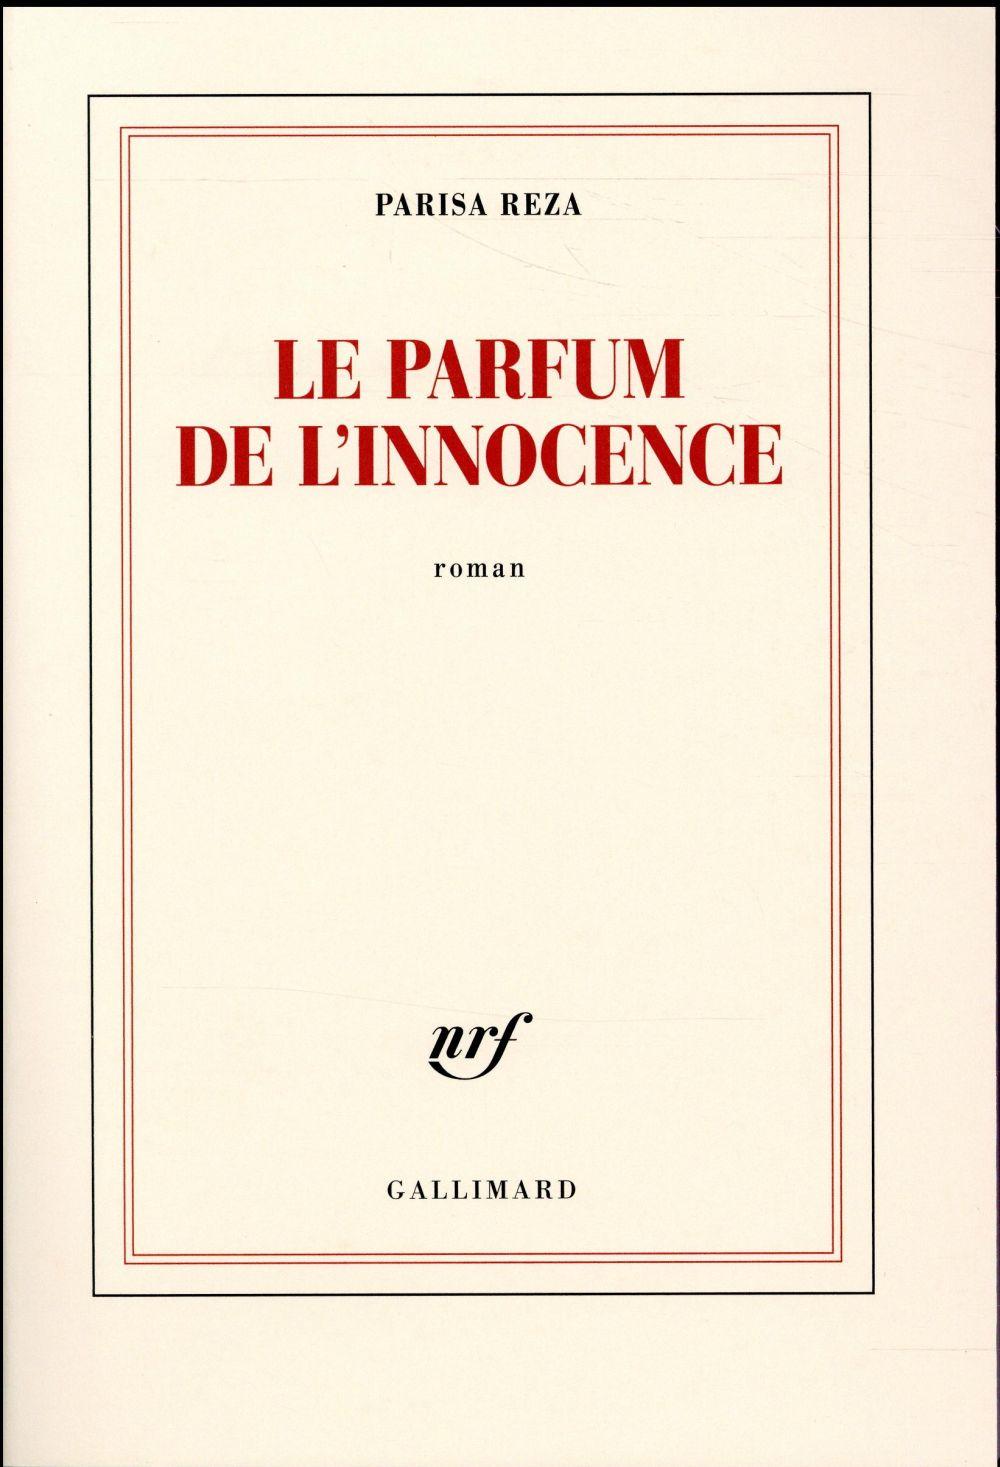 Le parfum de l'innocence  - Parisa Reza  